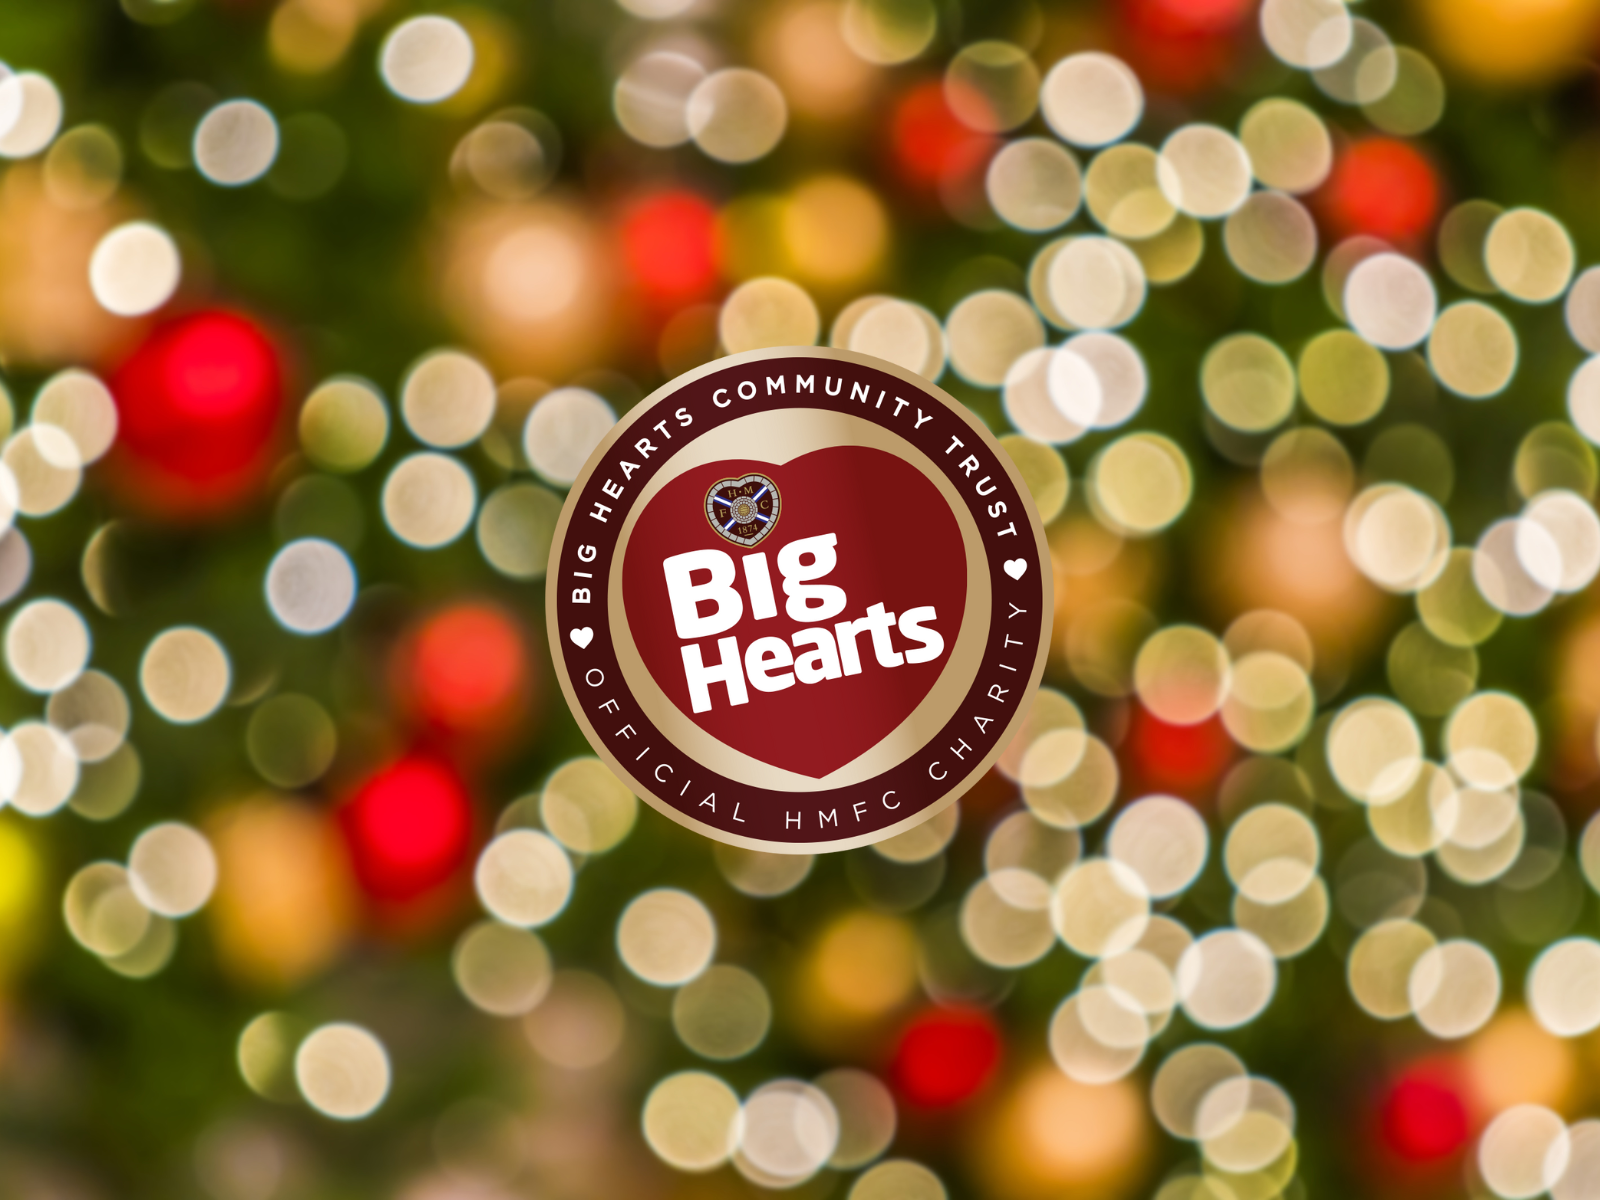  » Would you like to help Big Hearts share kindness this Christmas?